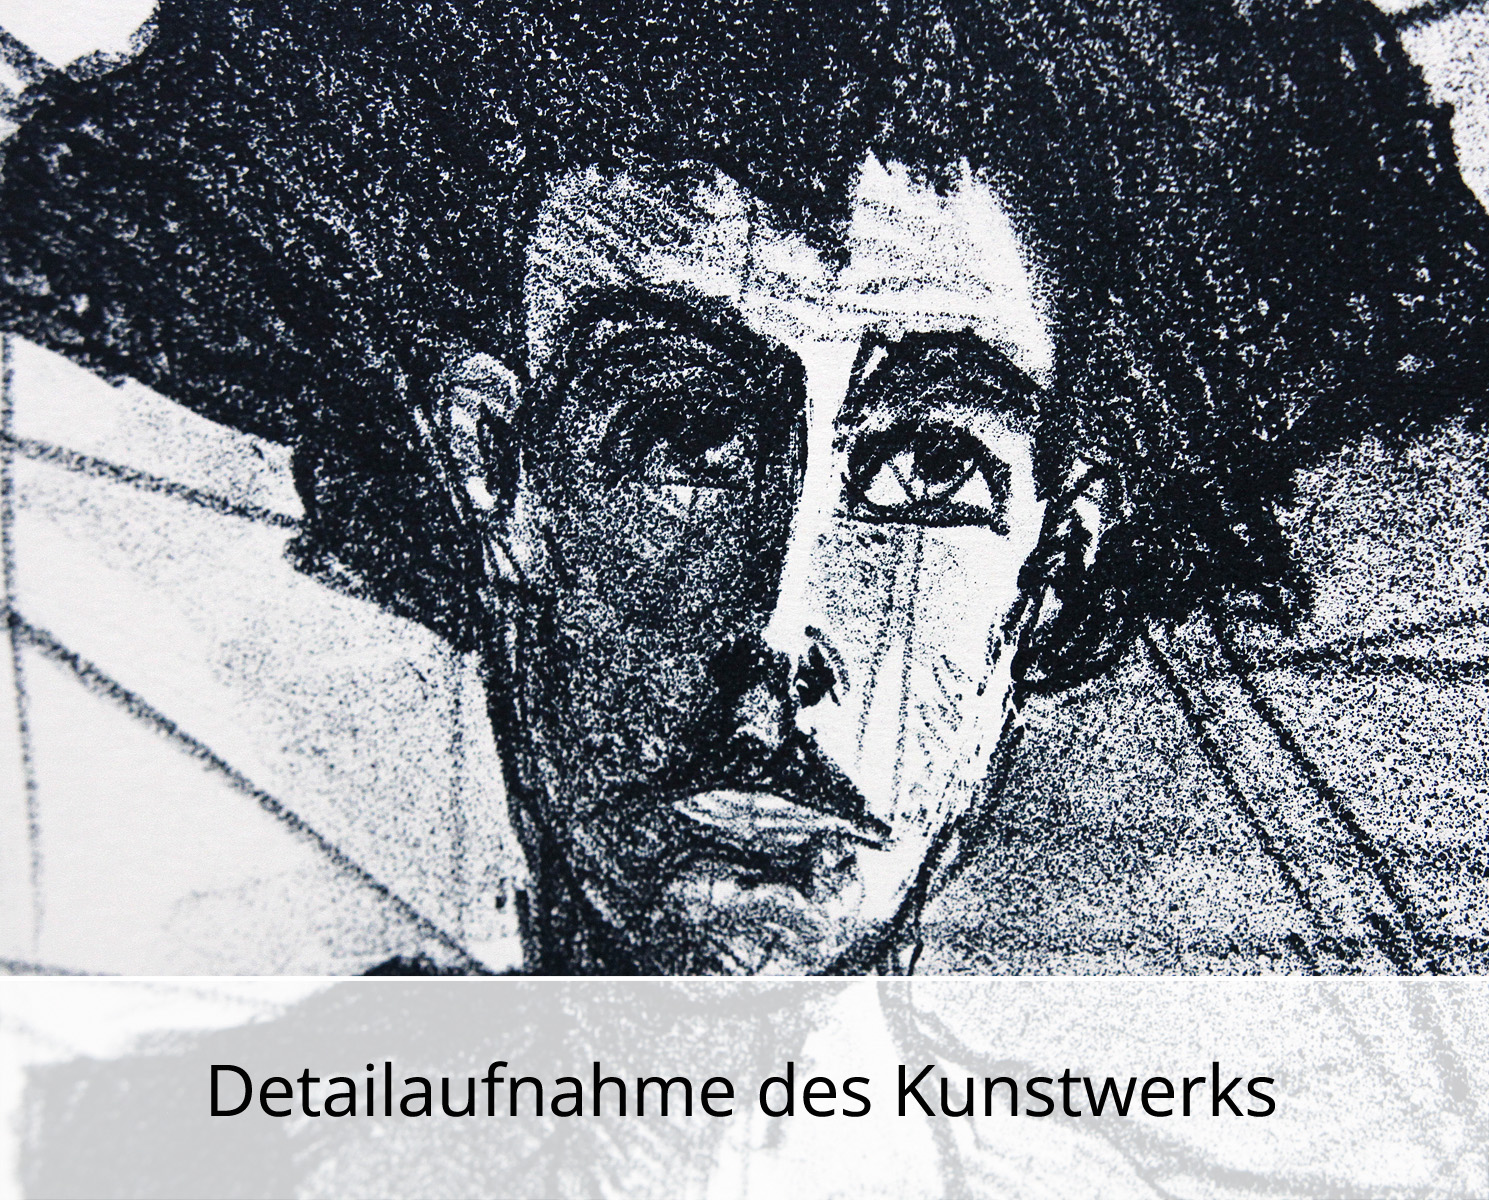 C. Blechschmidt: "Traumlos", Originale Grafik/Lithographie